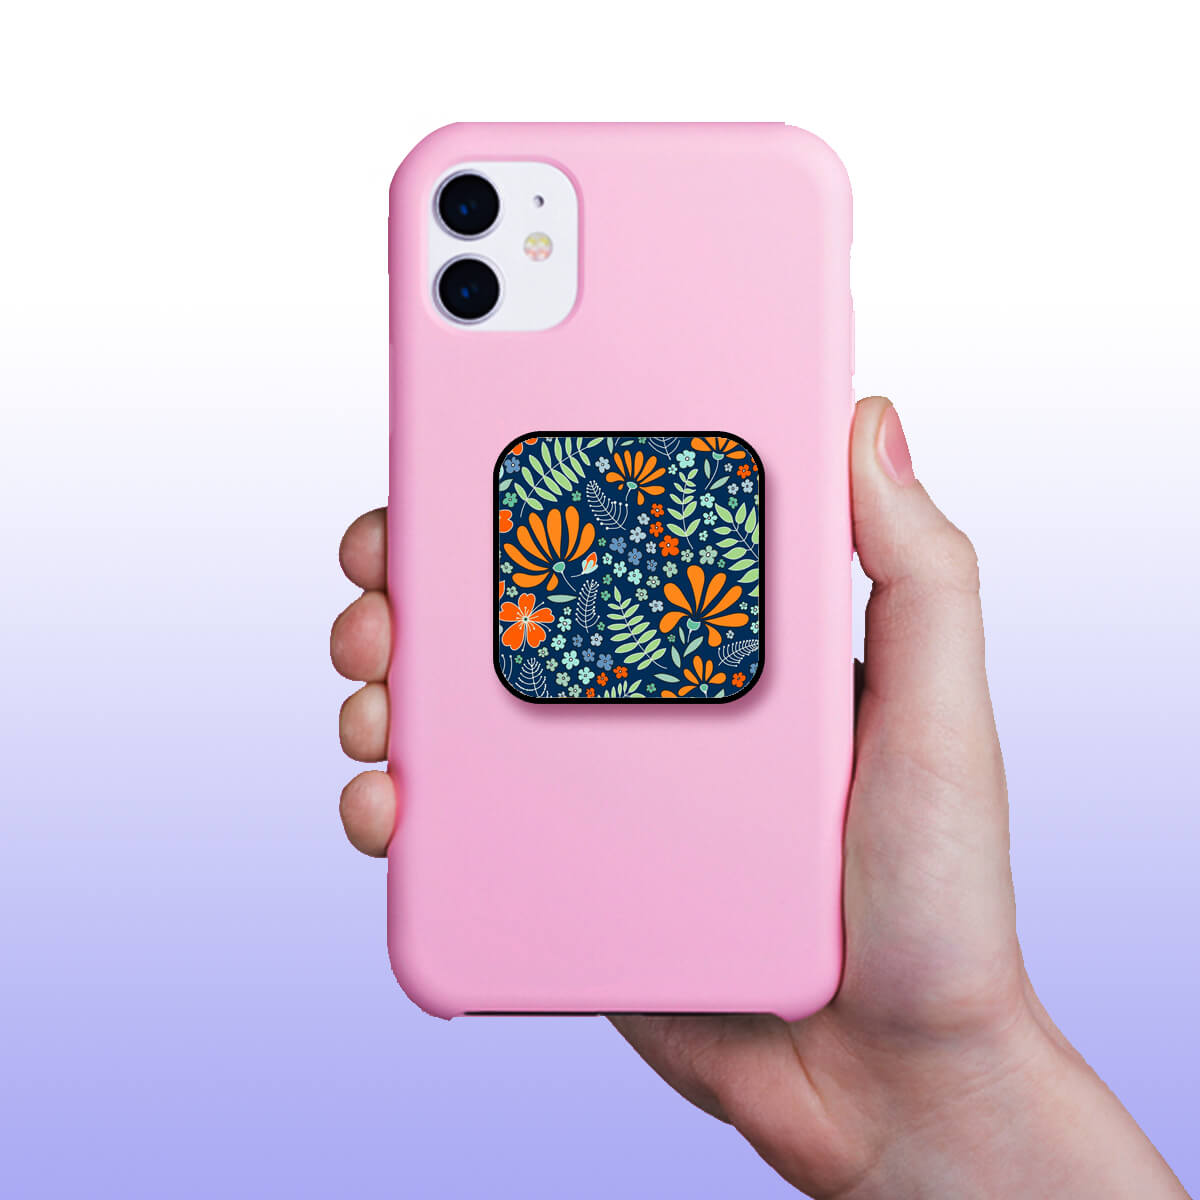 Midnight Bloom Orange Flowers & Leaves Floral Pattern Mobile Phone Grip Holder & Stand | Selfie Holder For Smart Phones